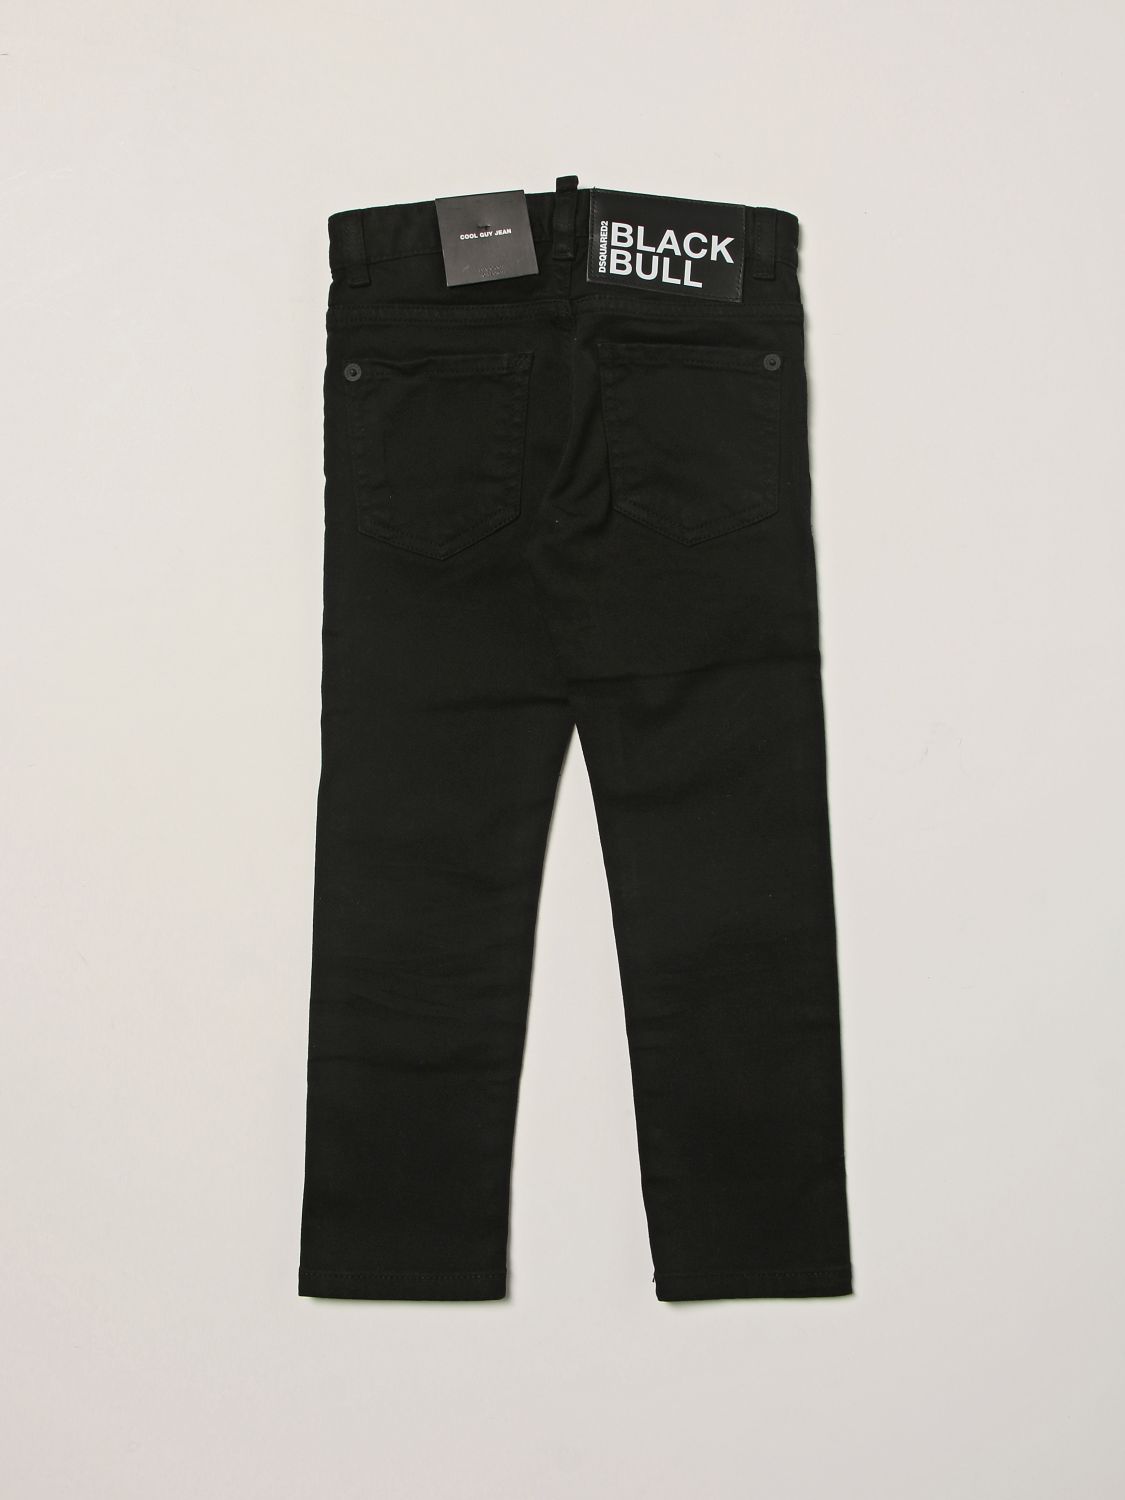 Jeans Dsquared2 Junior: Black Bull Dsquared2 Junior Jeans black 2